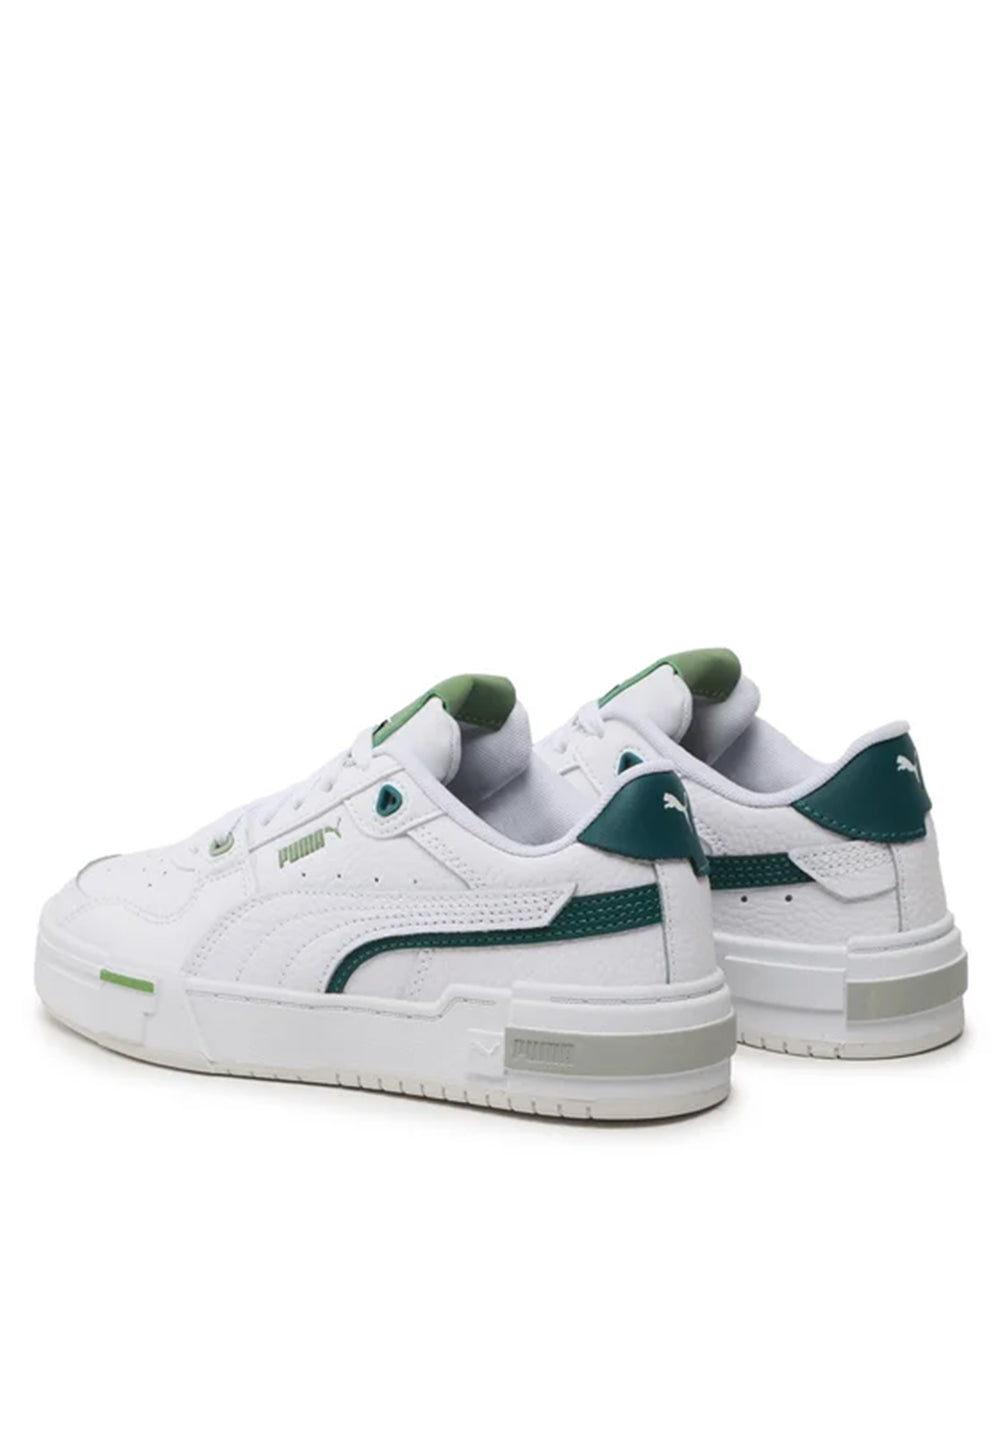 White-green shoes for children